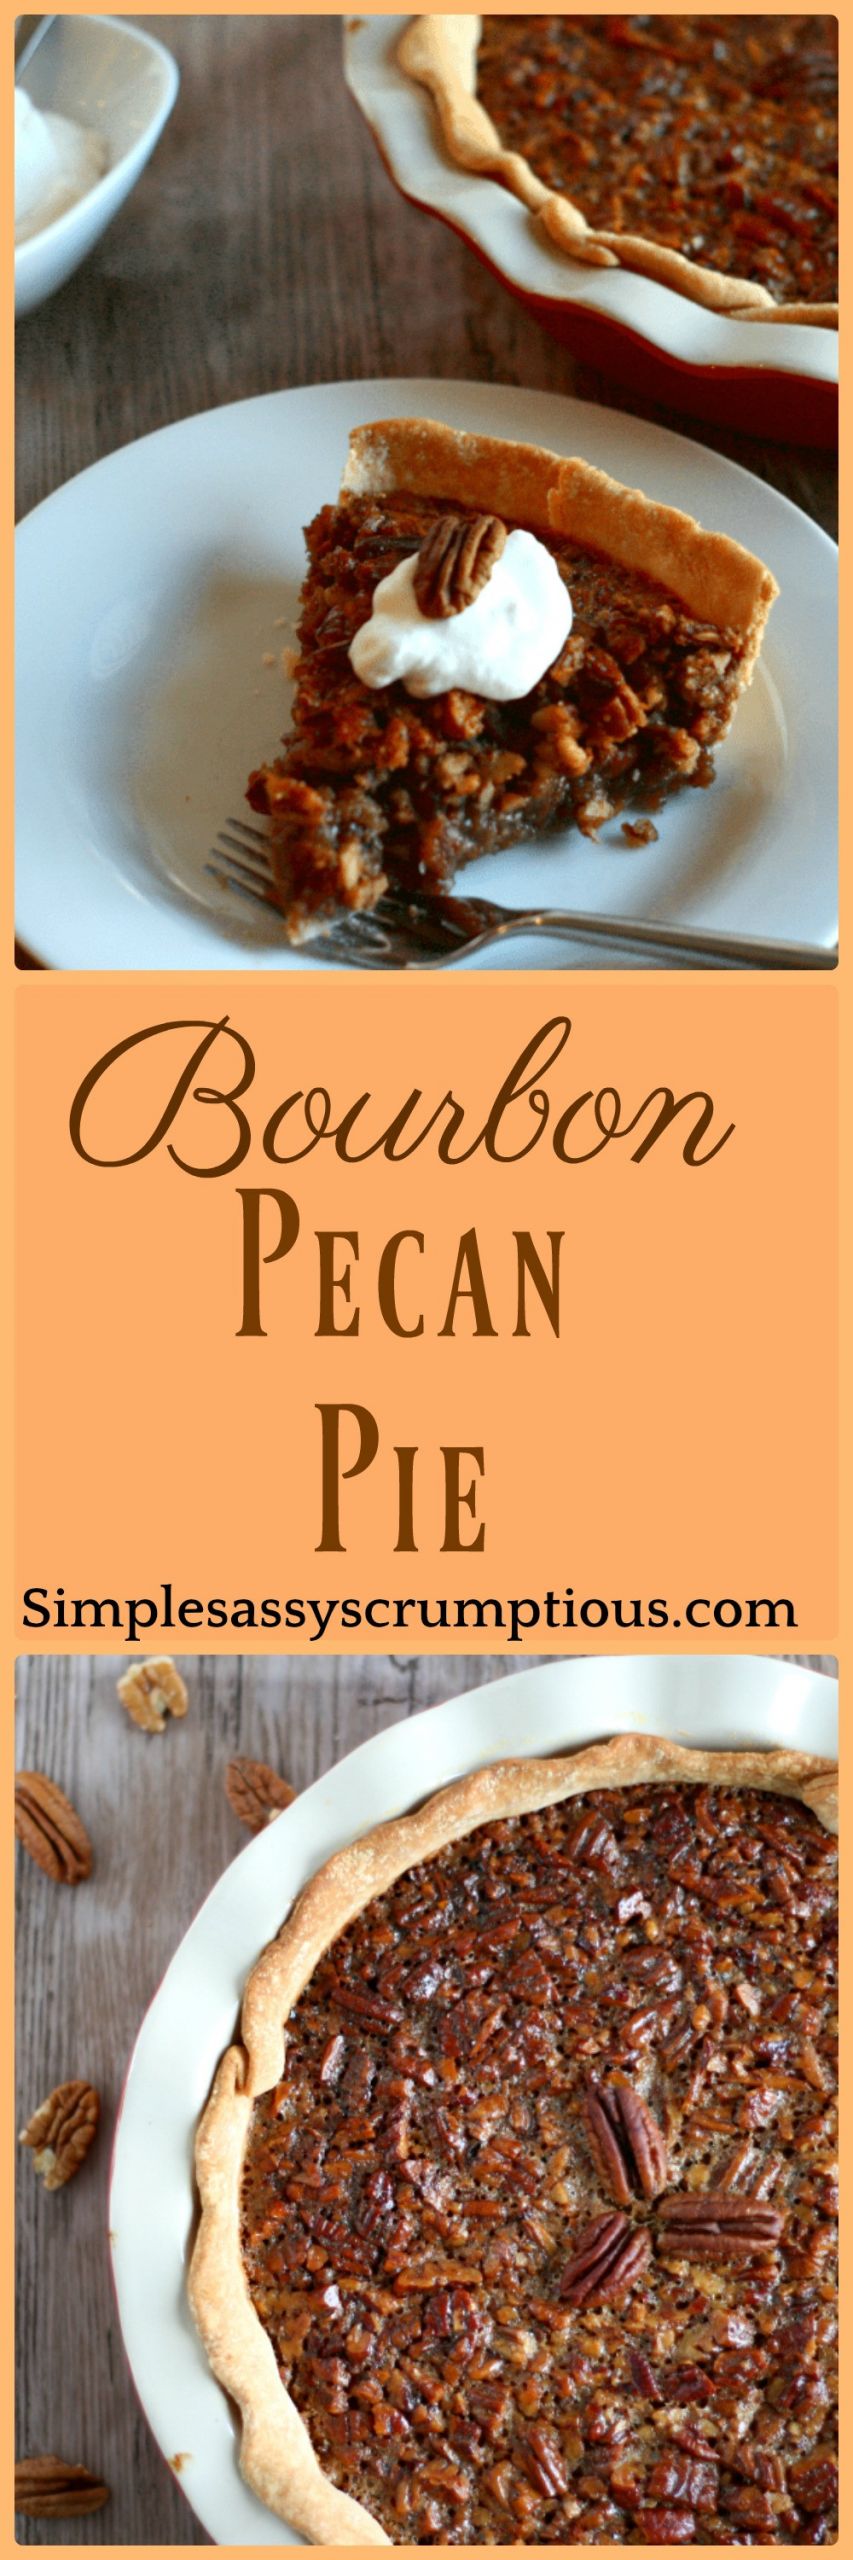 Epicurious Pecan Pie
 Bourbon Pecan Pie